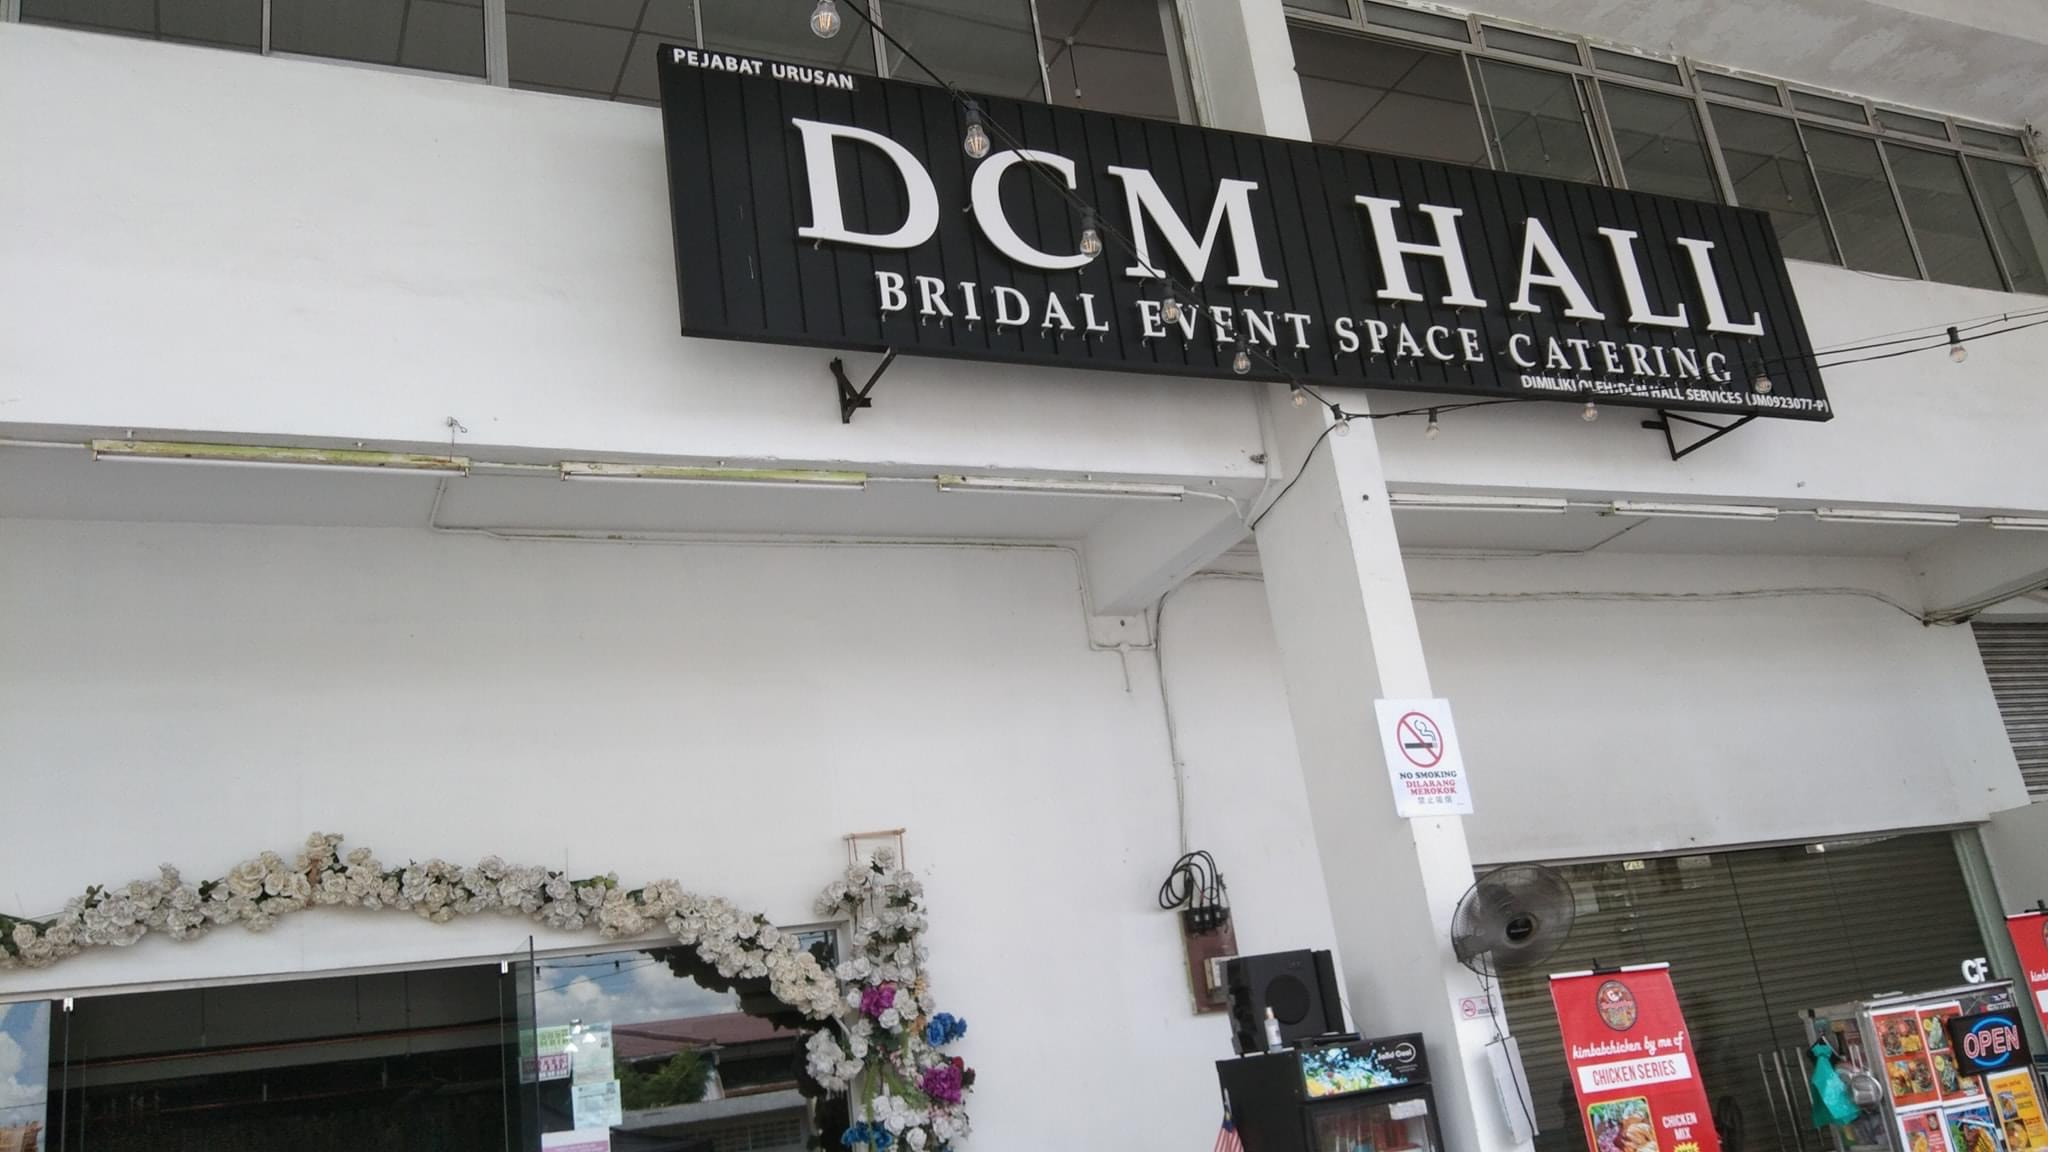 DCM Hall